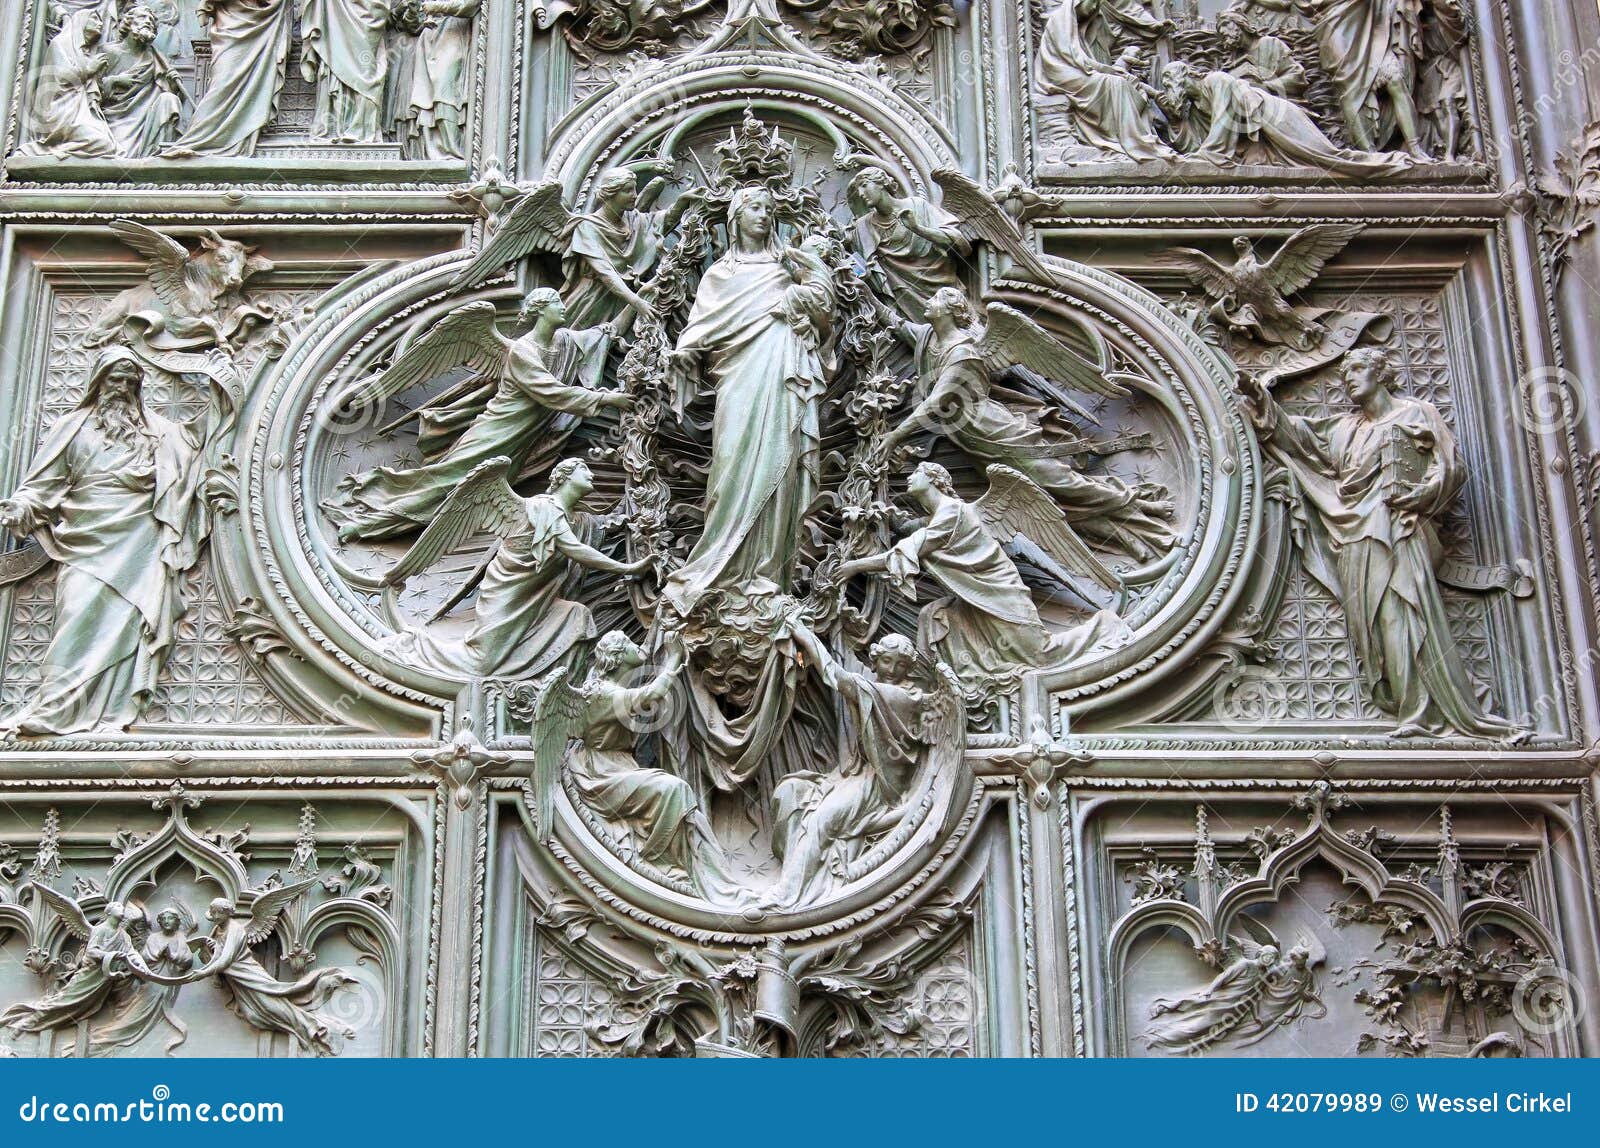 bronze door of the milan cathedral, italy